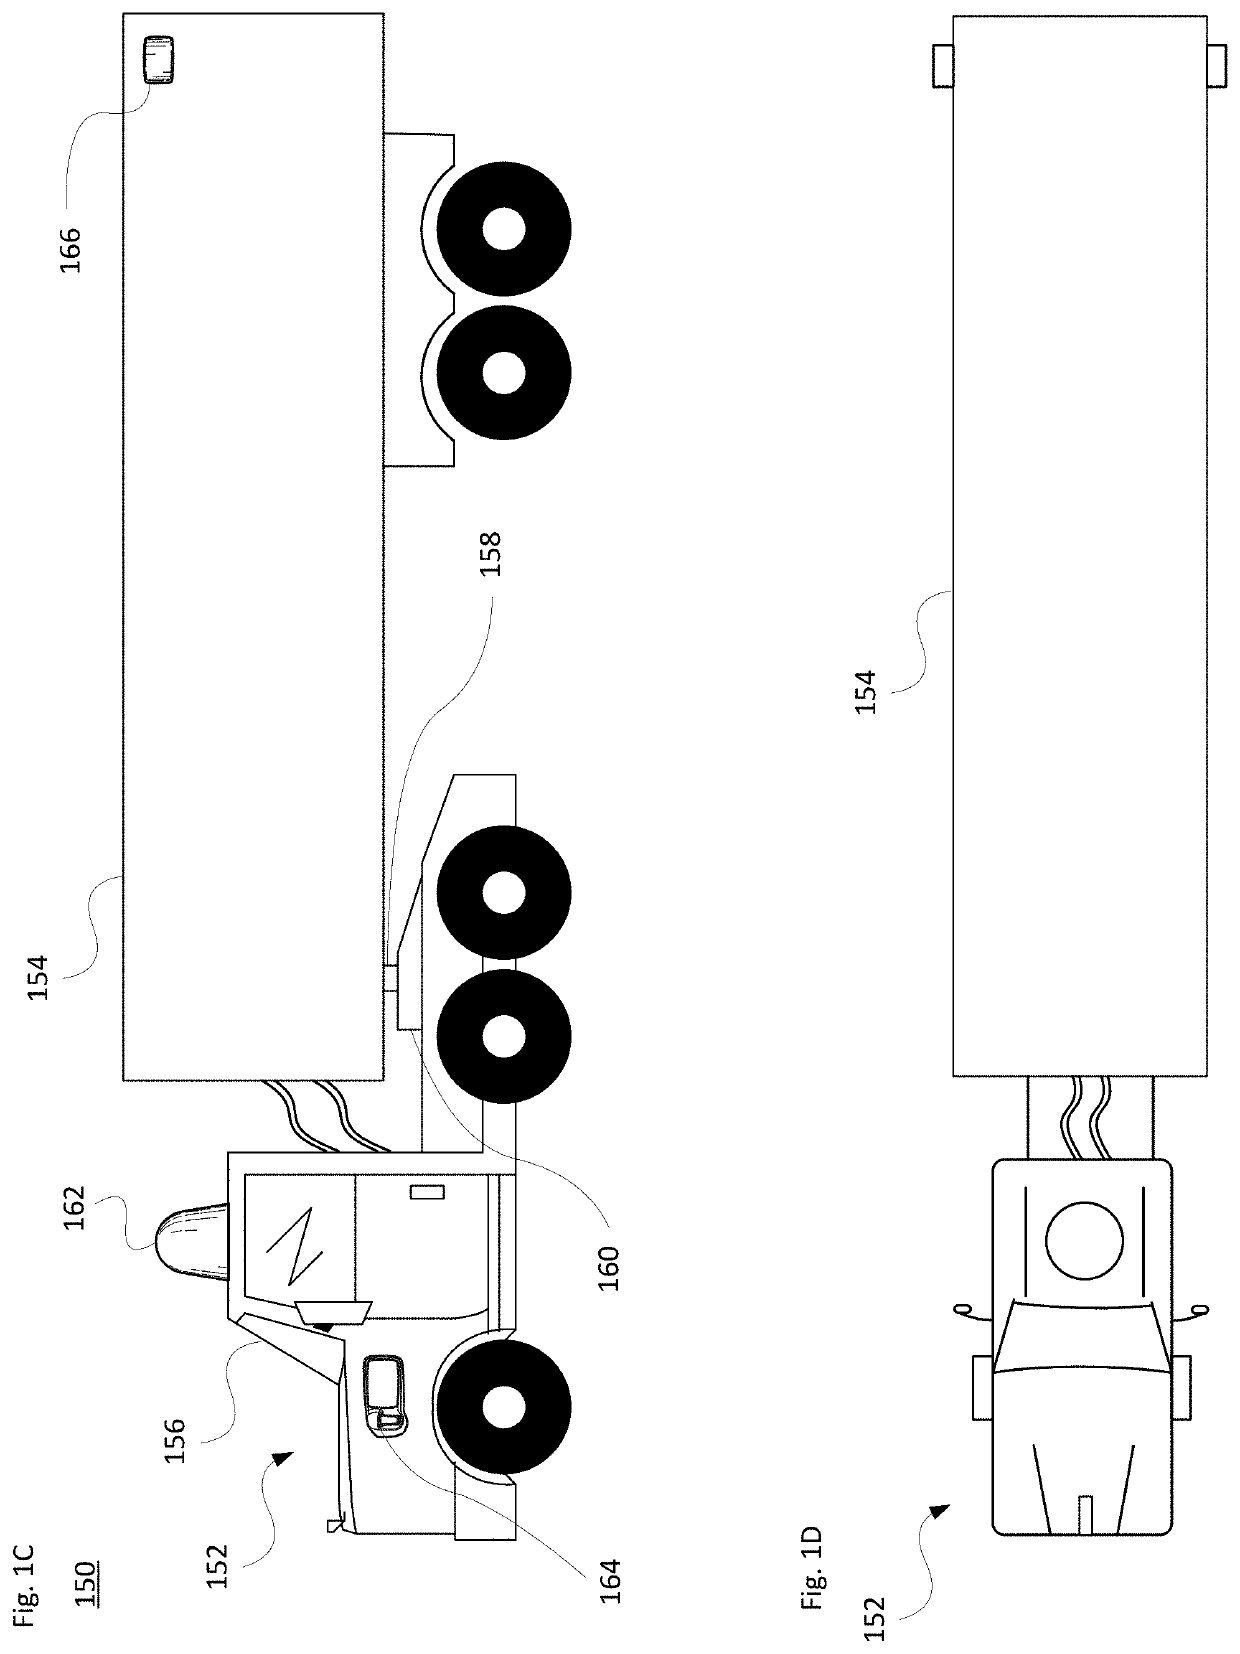 Determining Wheel Slippage on Self Driving Vehicle